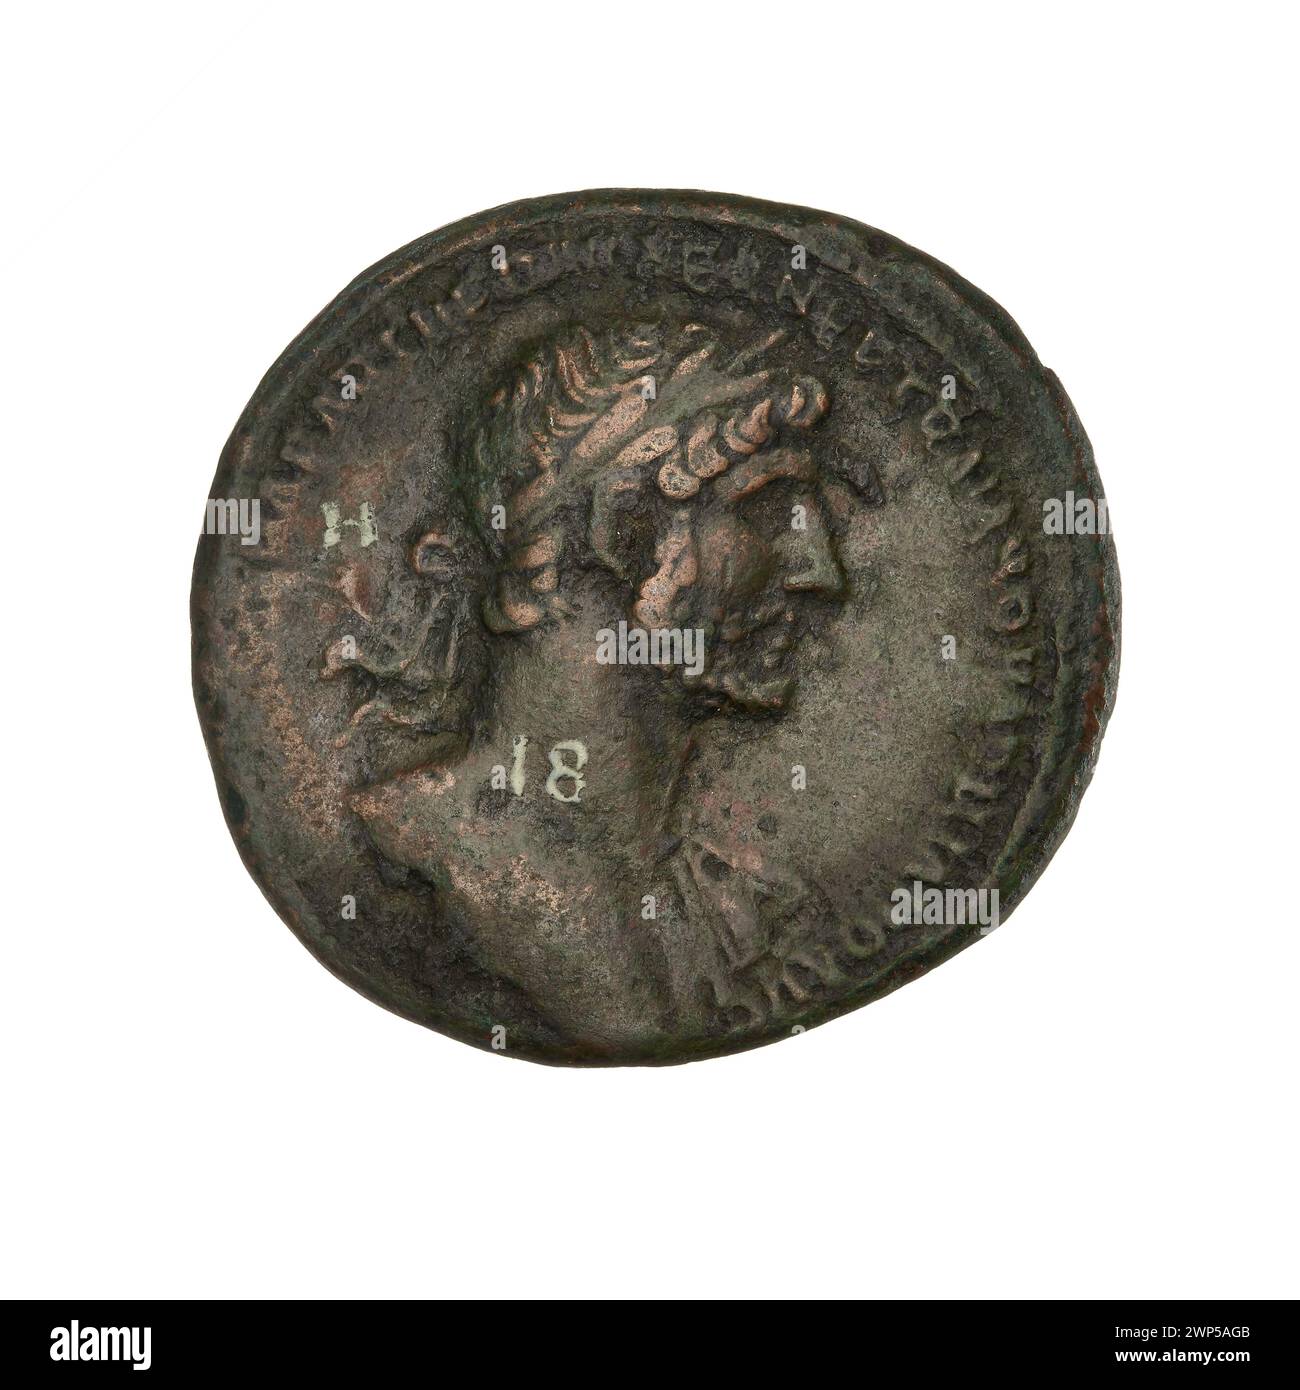 AS; Hadrian (76-138; Roman emperor 117-138); 118 (118-00-00-118-00-00);Eagles, bustles, banners, laurel wreaths Stock Photo